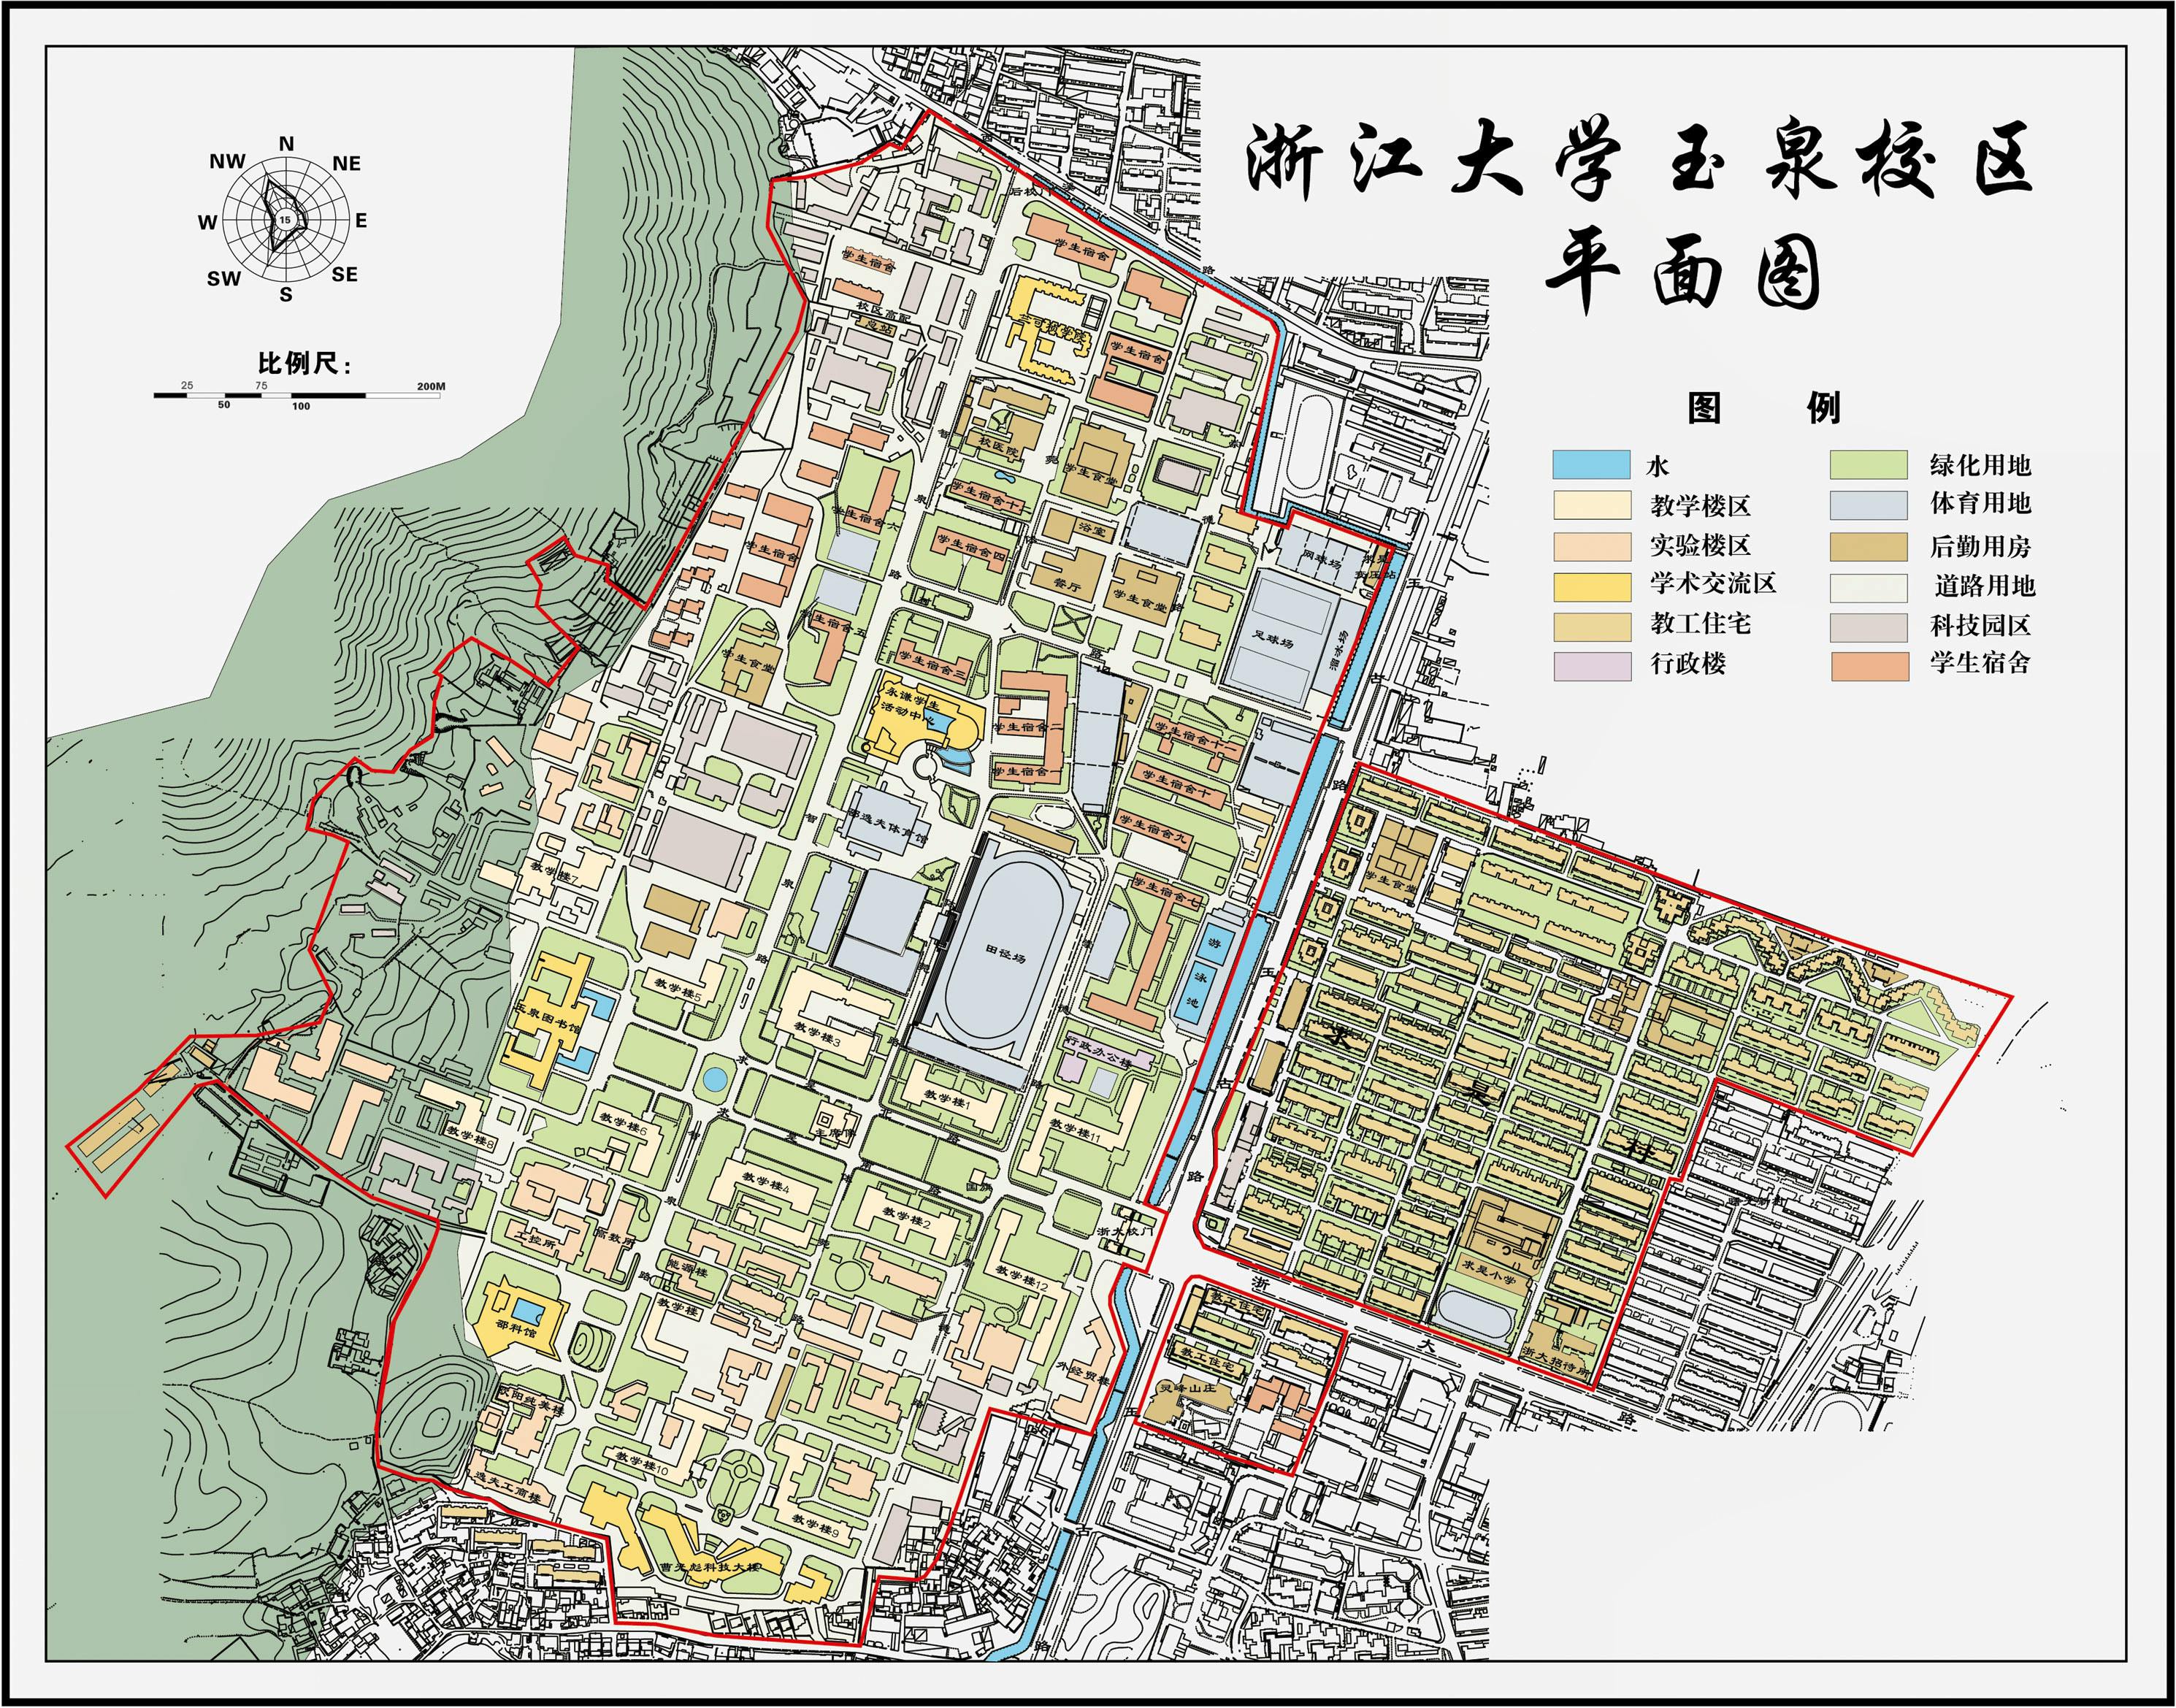 ZJU-Yuquan-Campus-Map